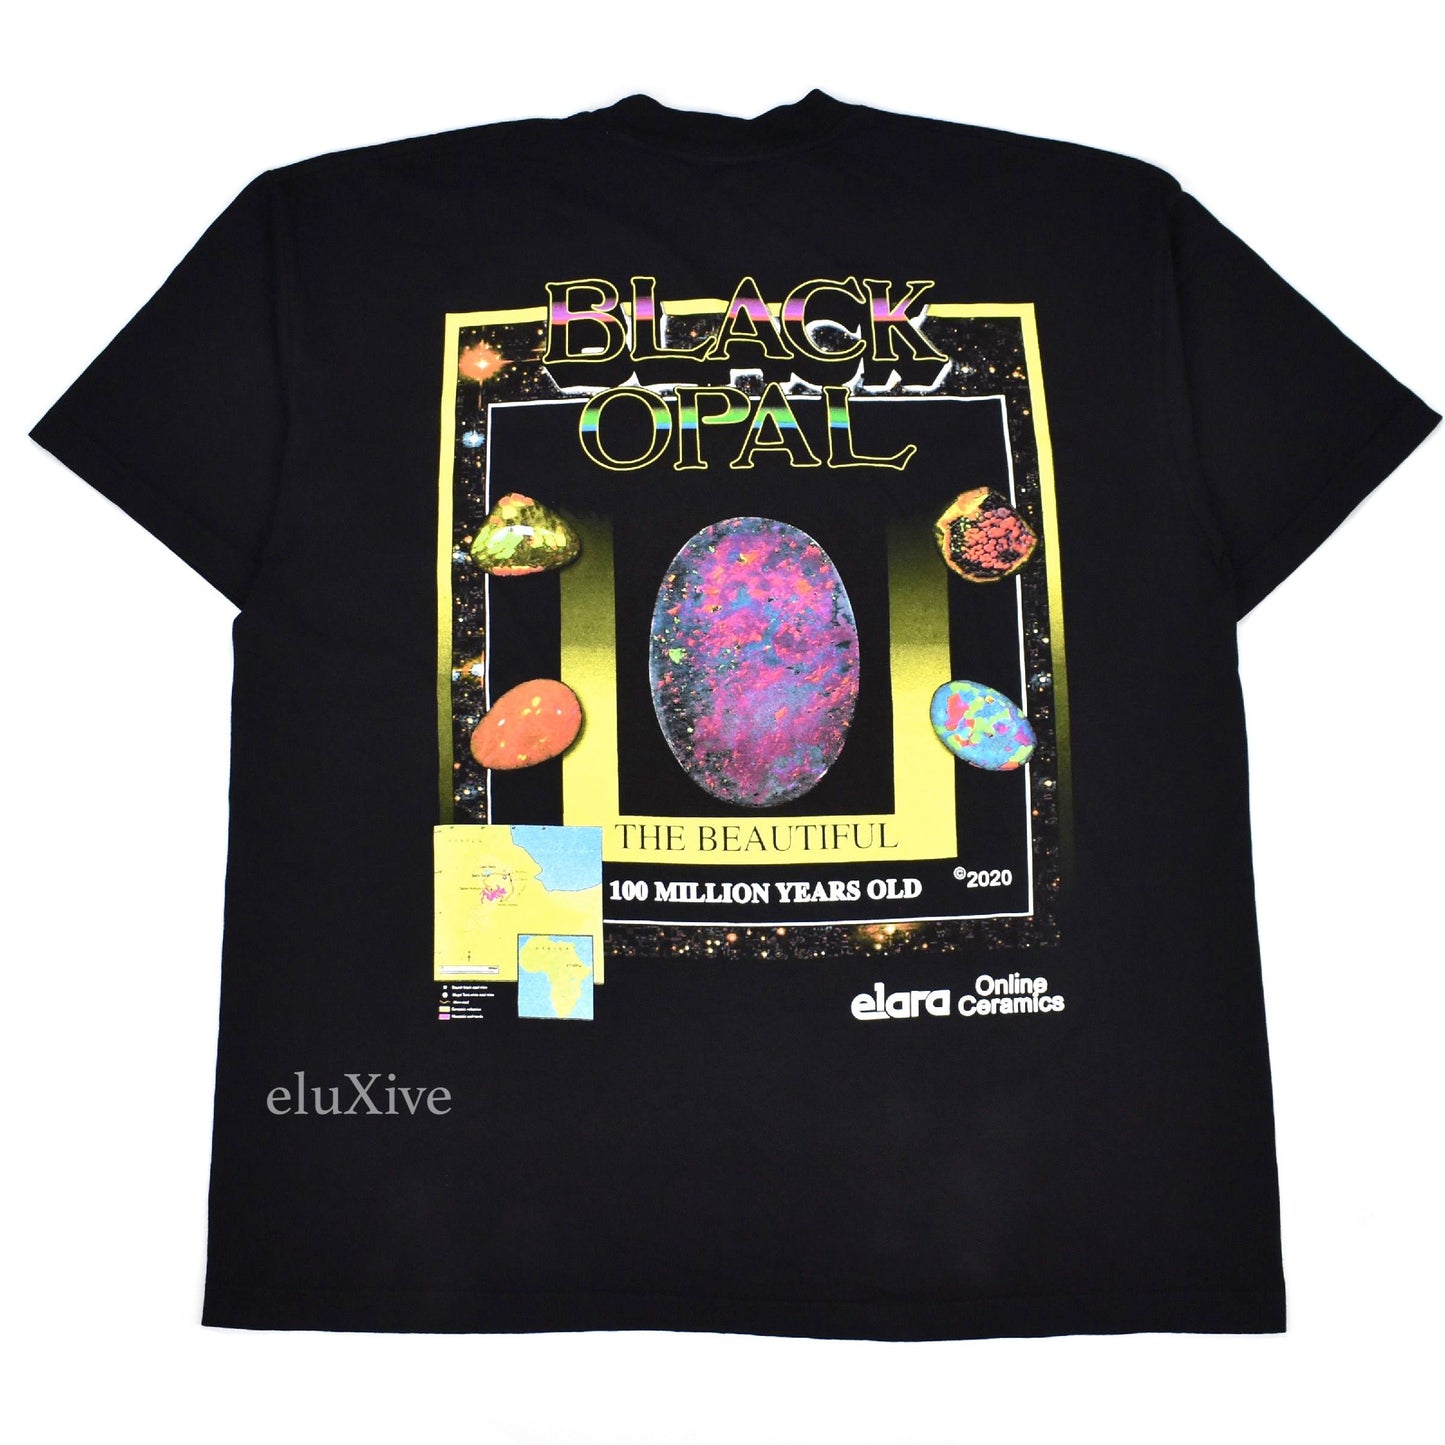 Online Ceramics x Elara - Uncut Gems Black Opal T-Shirt (Black)